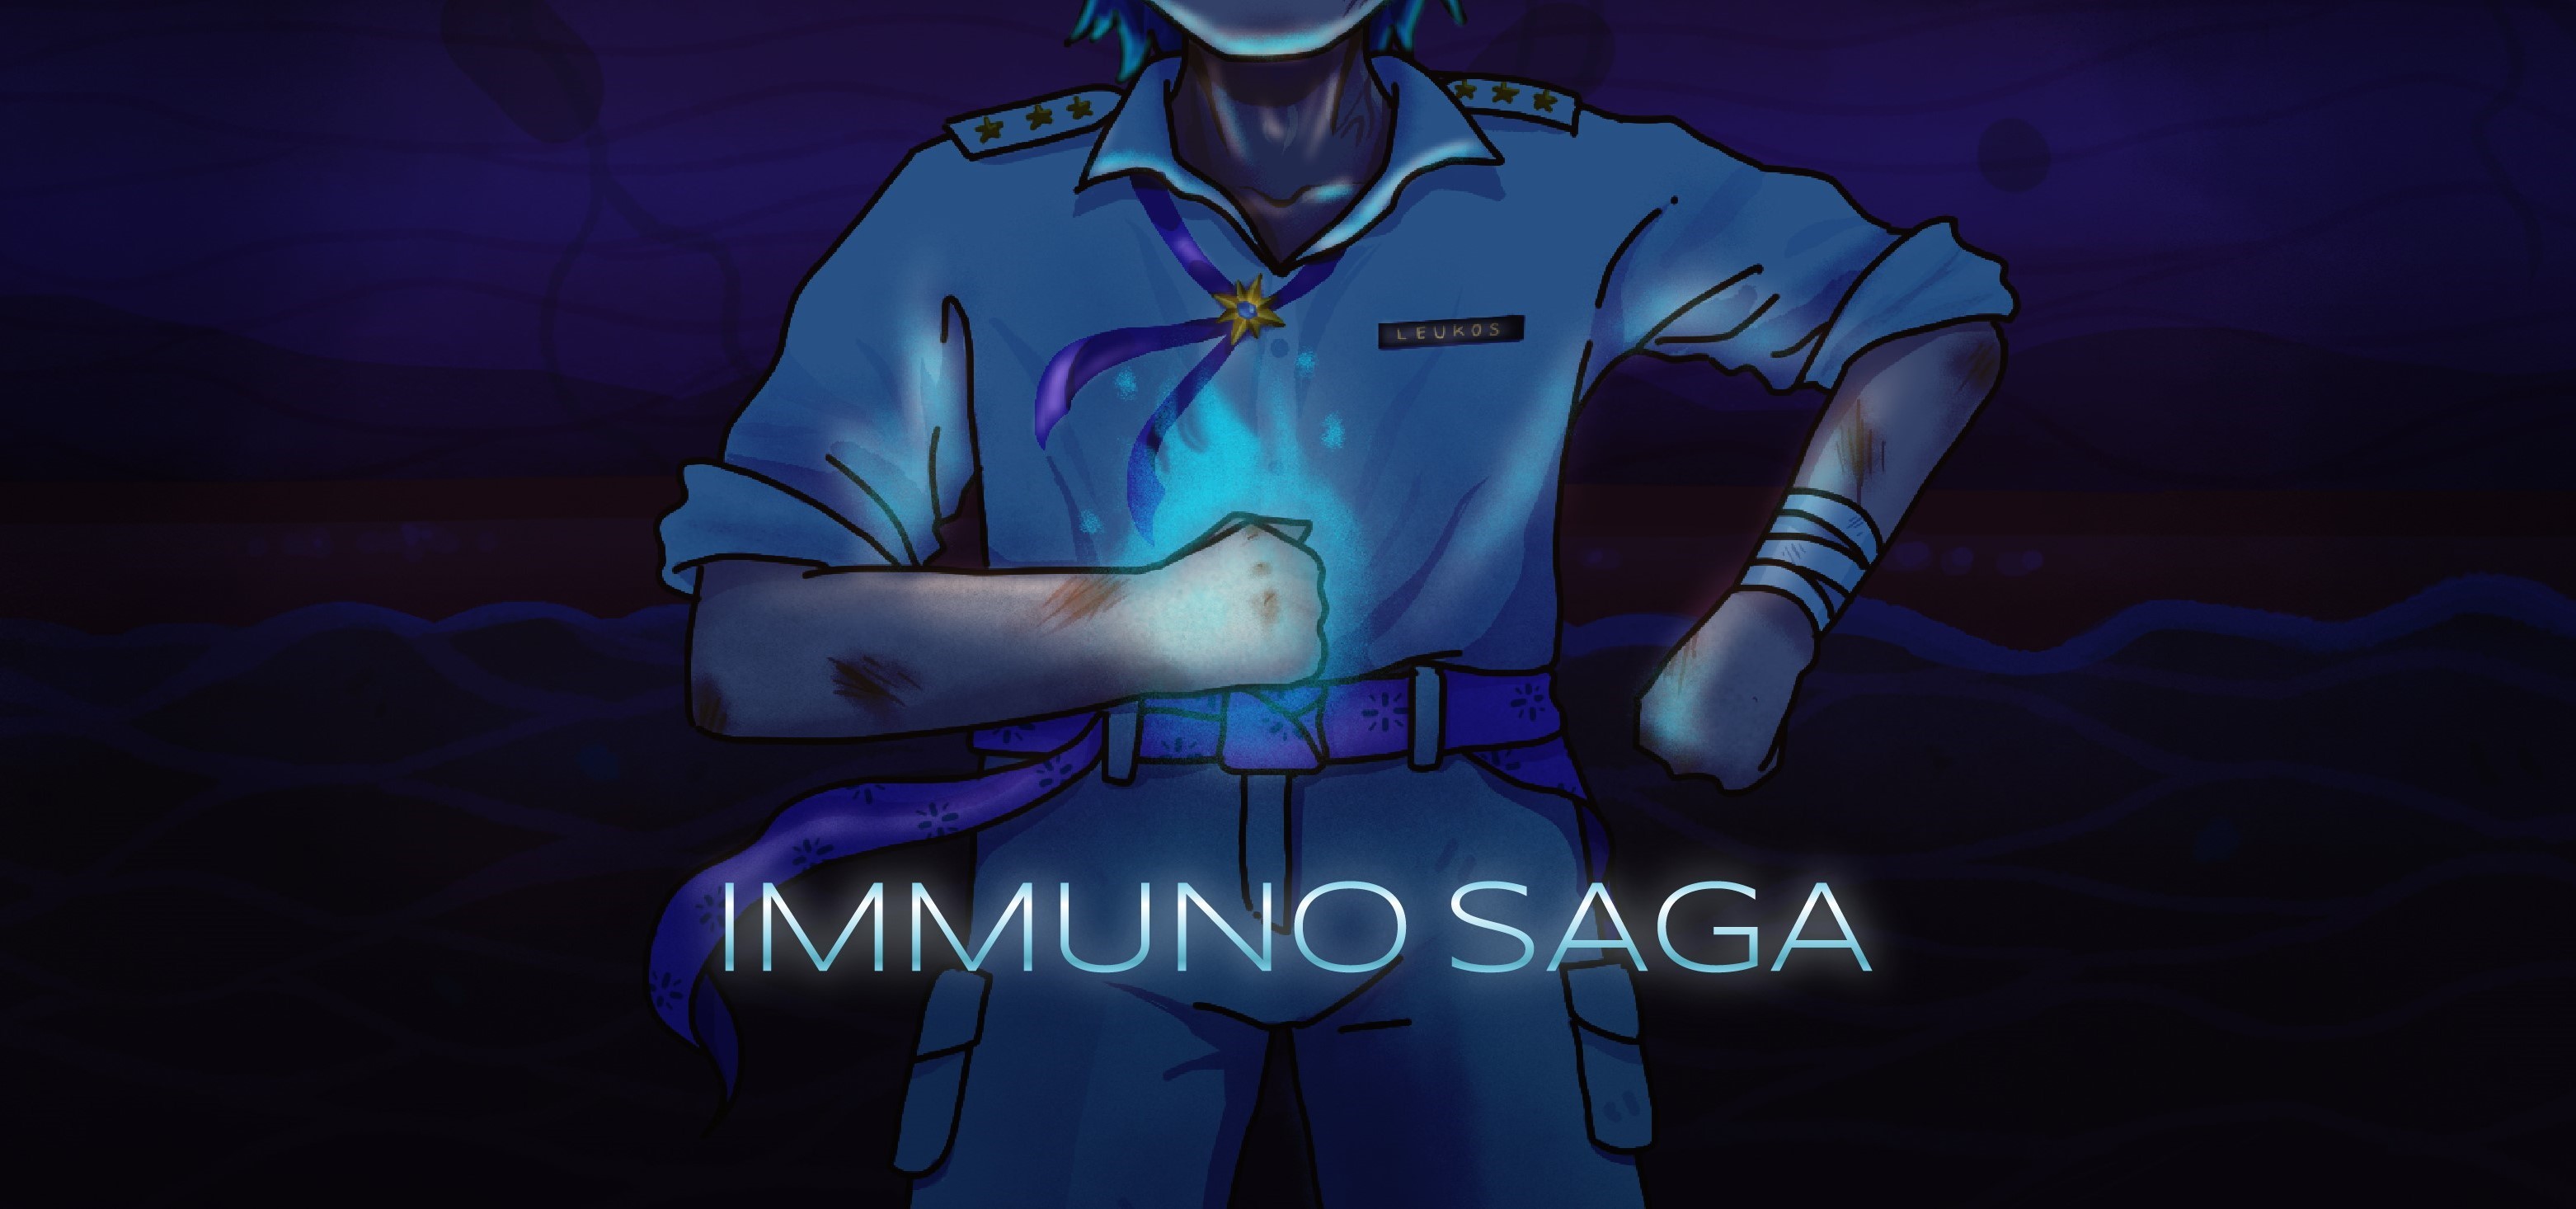 IMMUNO SAGA: The Battle Within